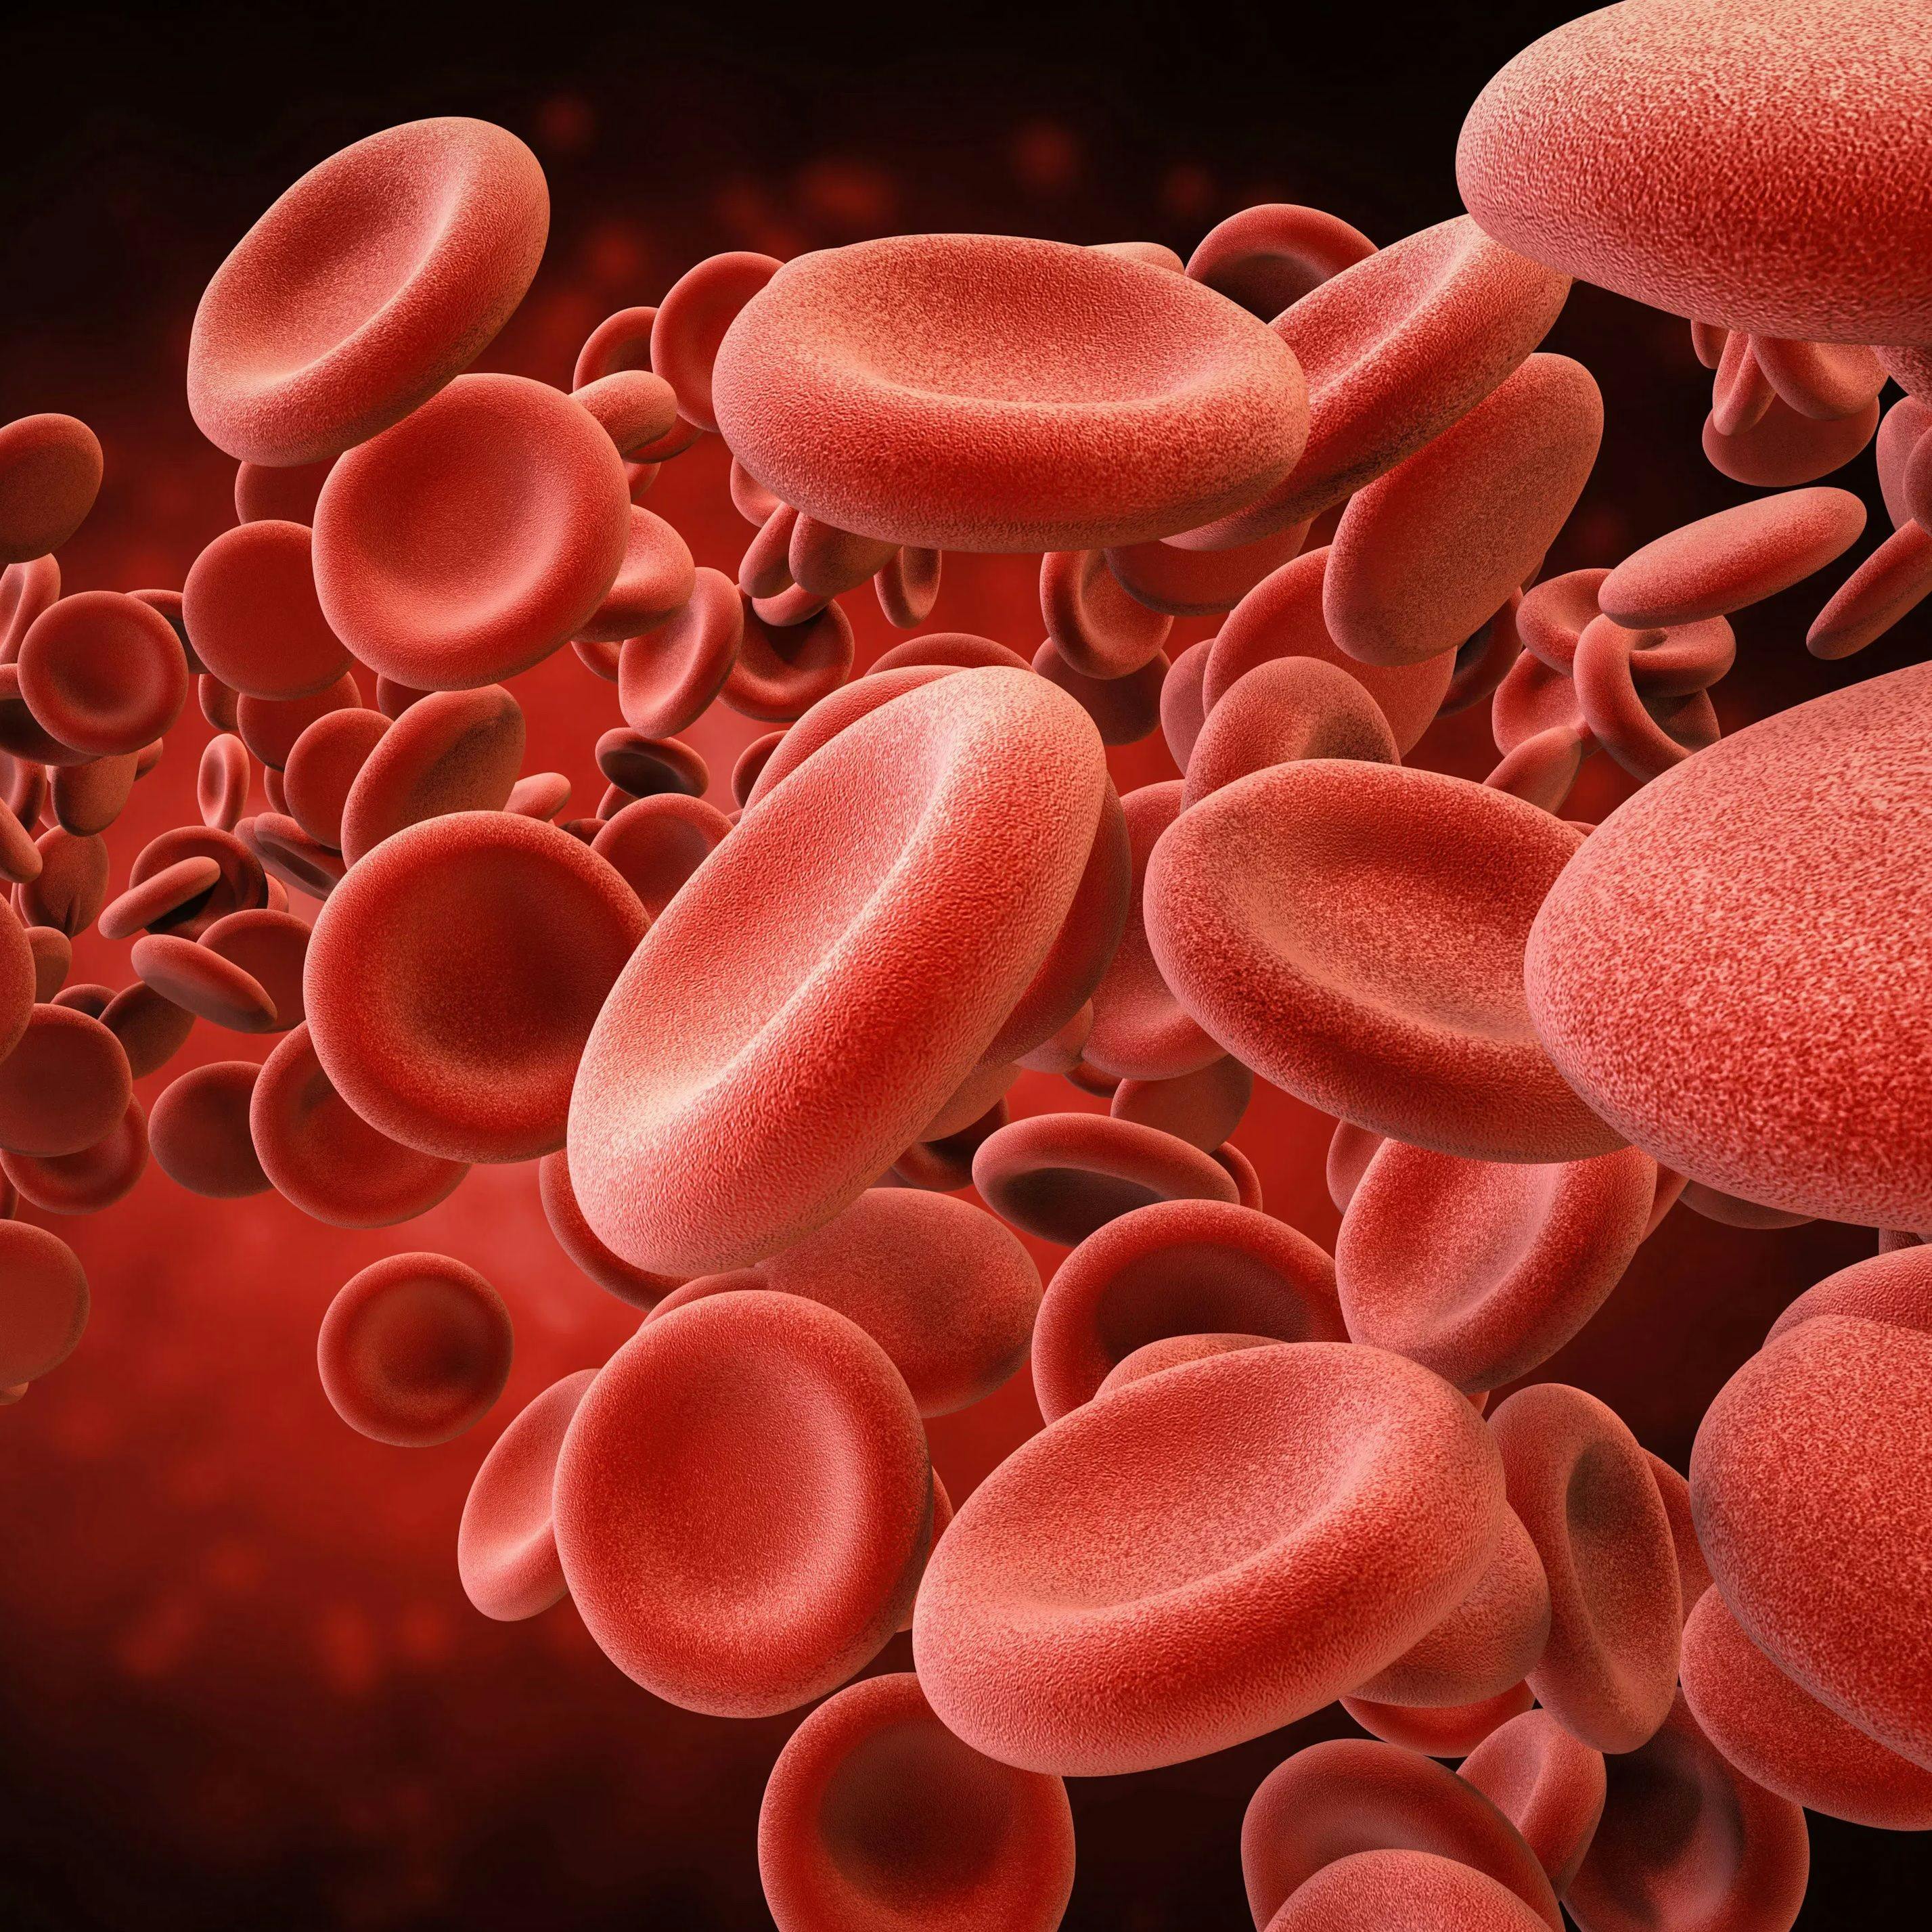 Red blood cells | Image Credit: Fotolia